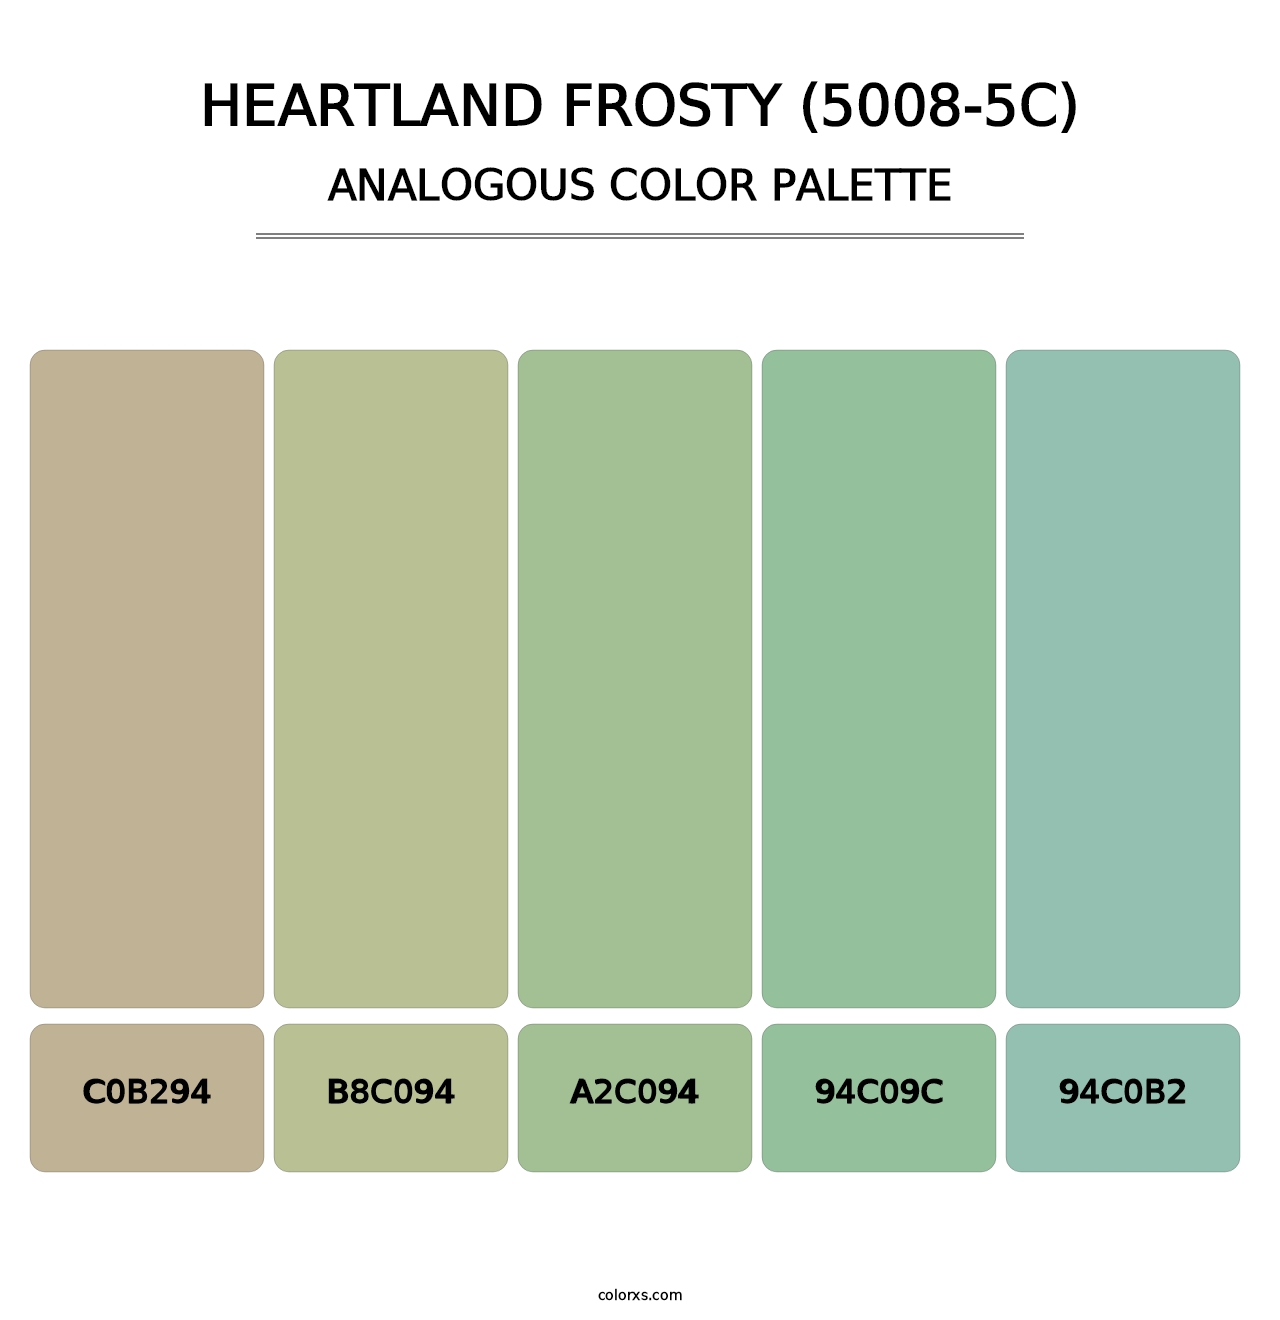 Heartland Frosty (5008-5C) - Analogous Color Palette